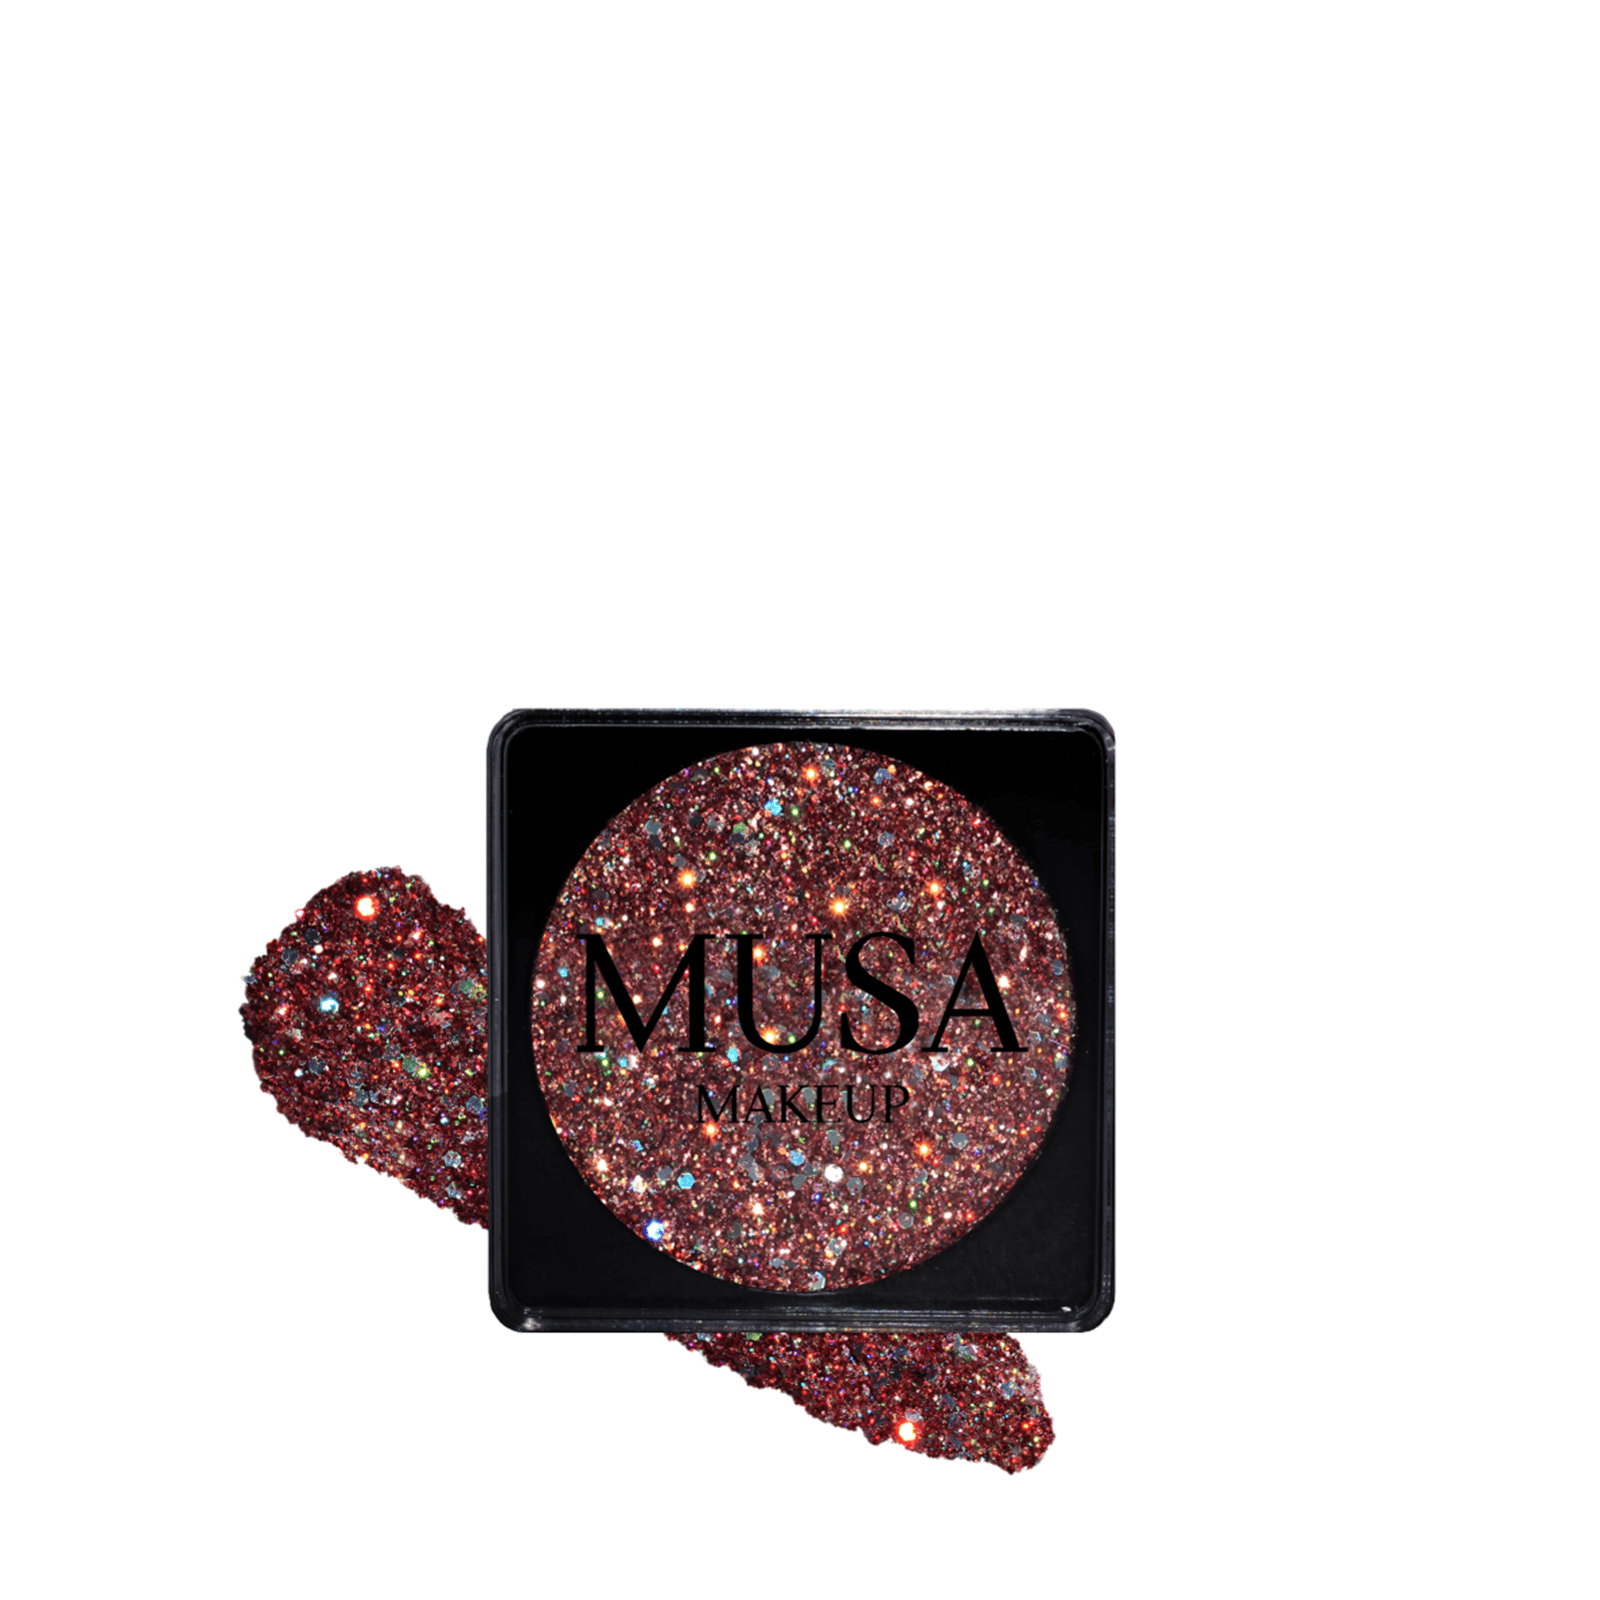 MUSA Makeup Creamy Glitter Heartbreaker 4g (0.14 oz)